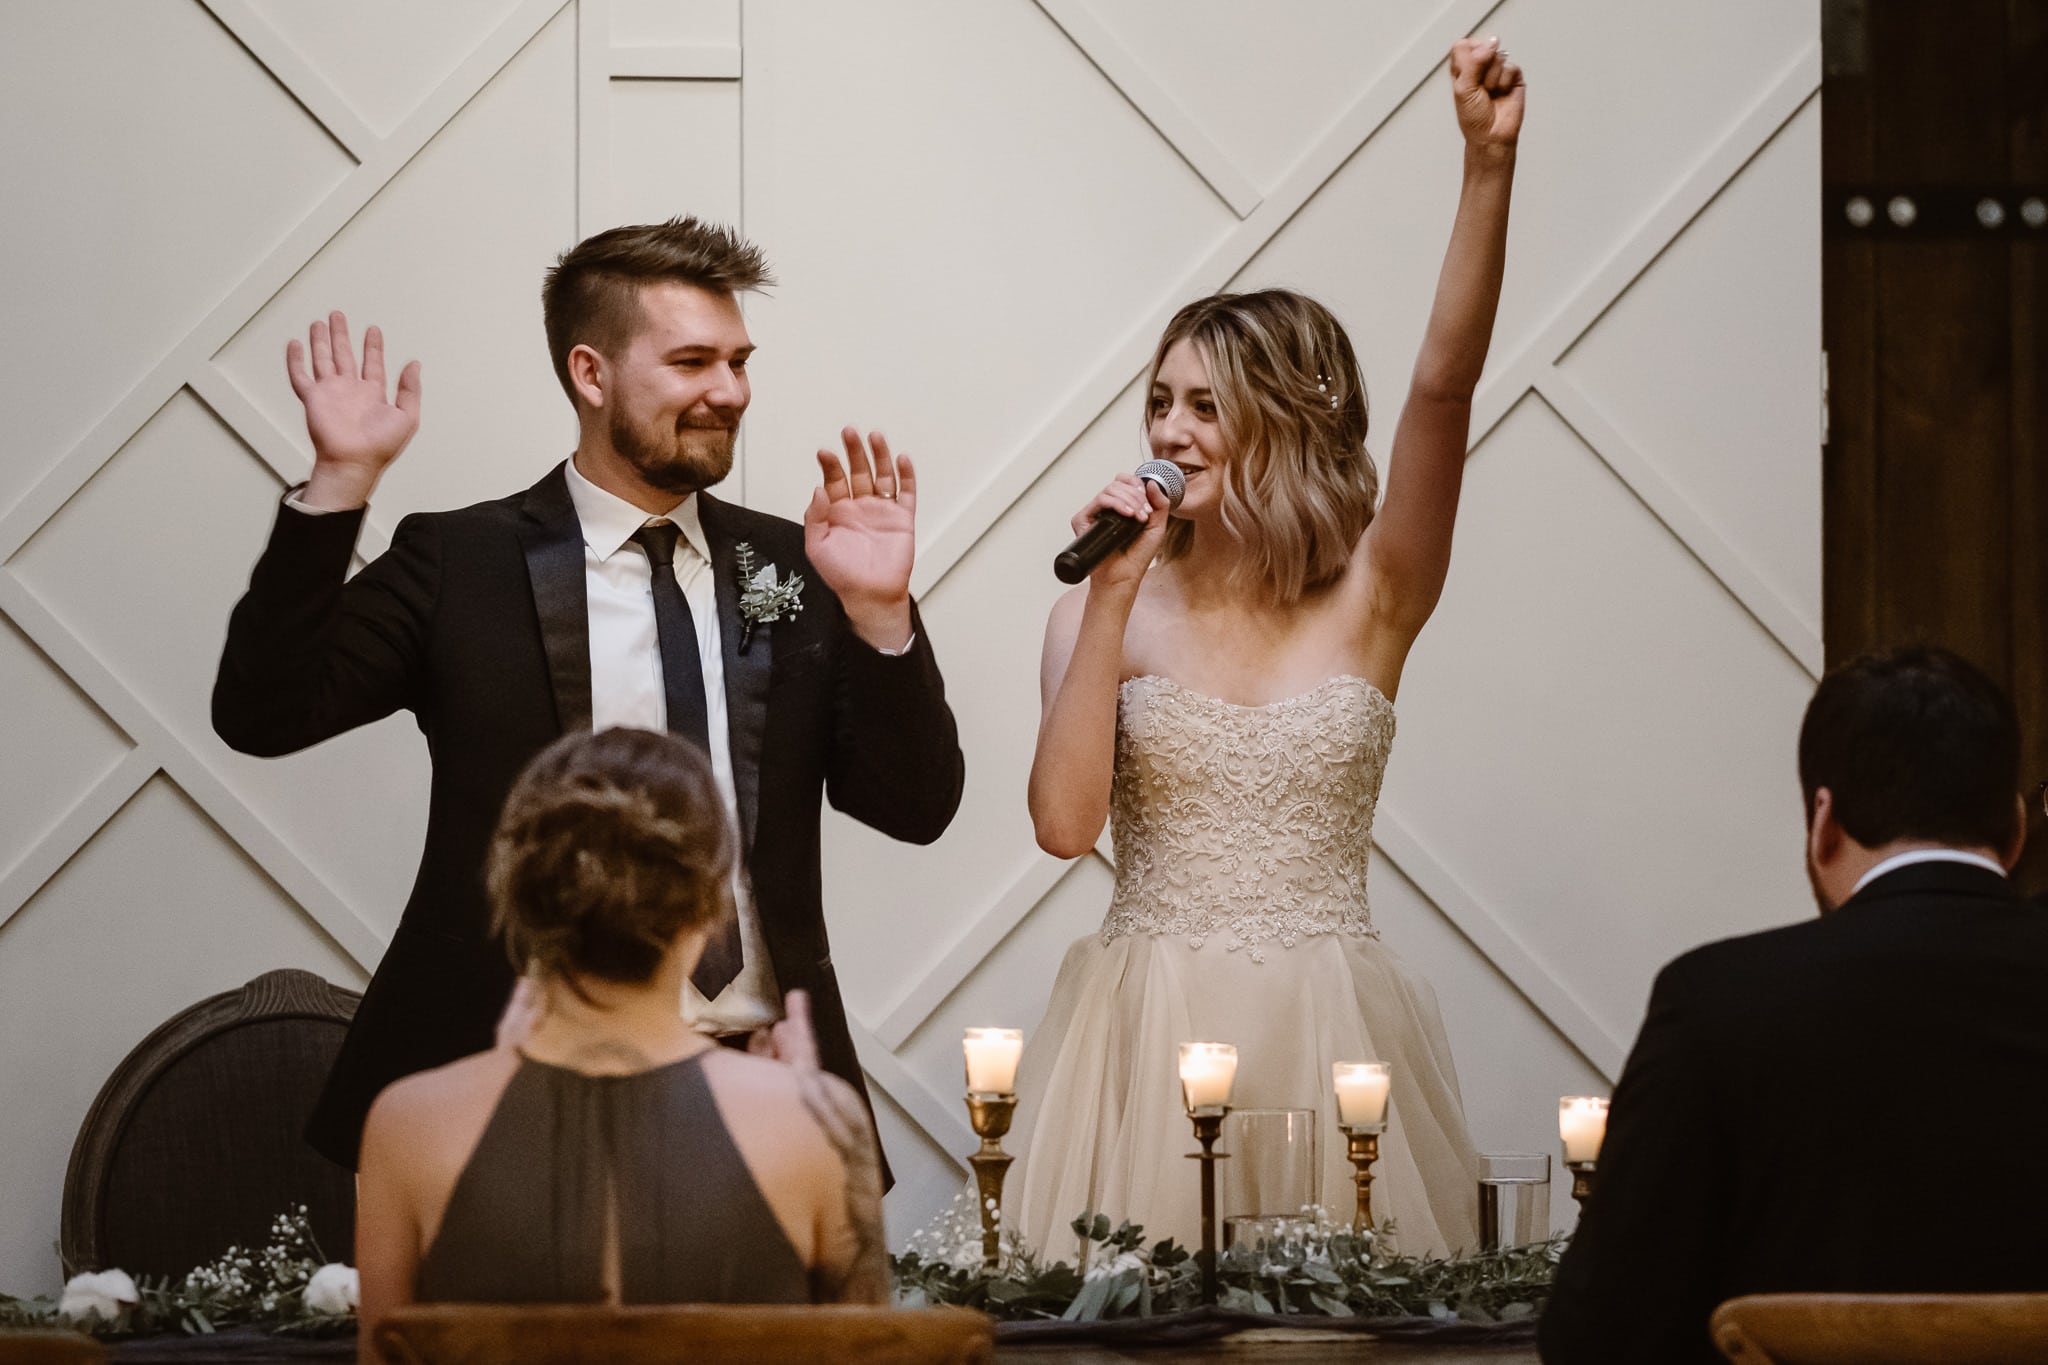 St Vrain Wedding Photographer | Longmont Wedding Photographer | Colorado Winter Wedding Photographer, Colorado industrial chic wedding ceremony, wedding toasts